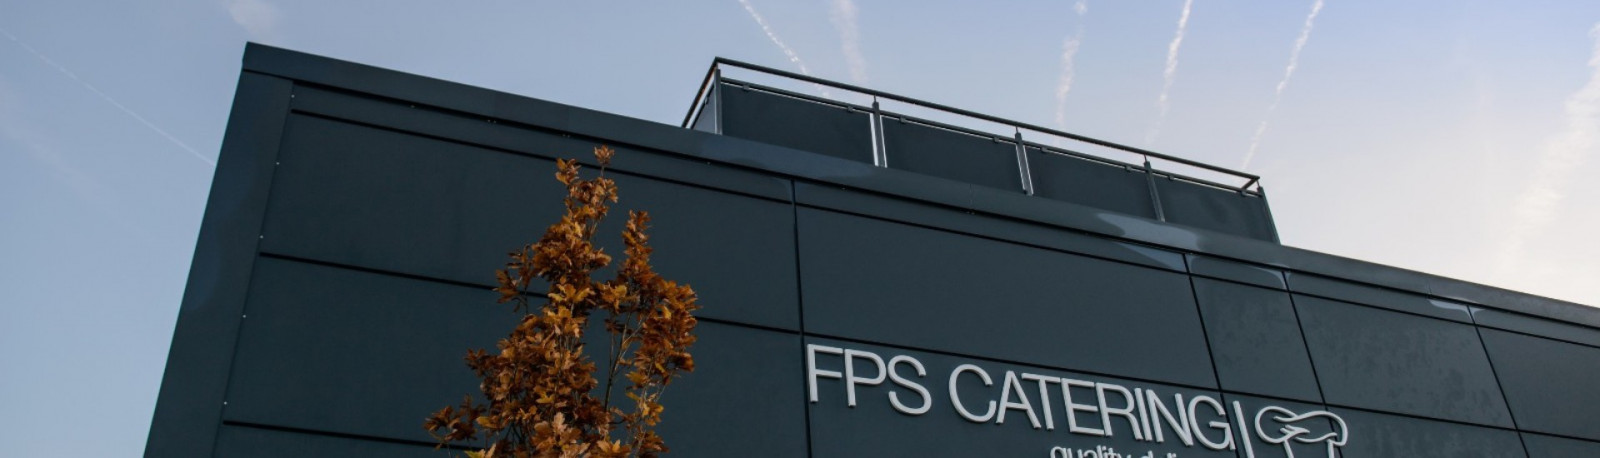 FPS Catering Full Service Header